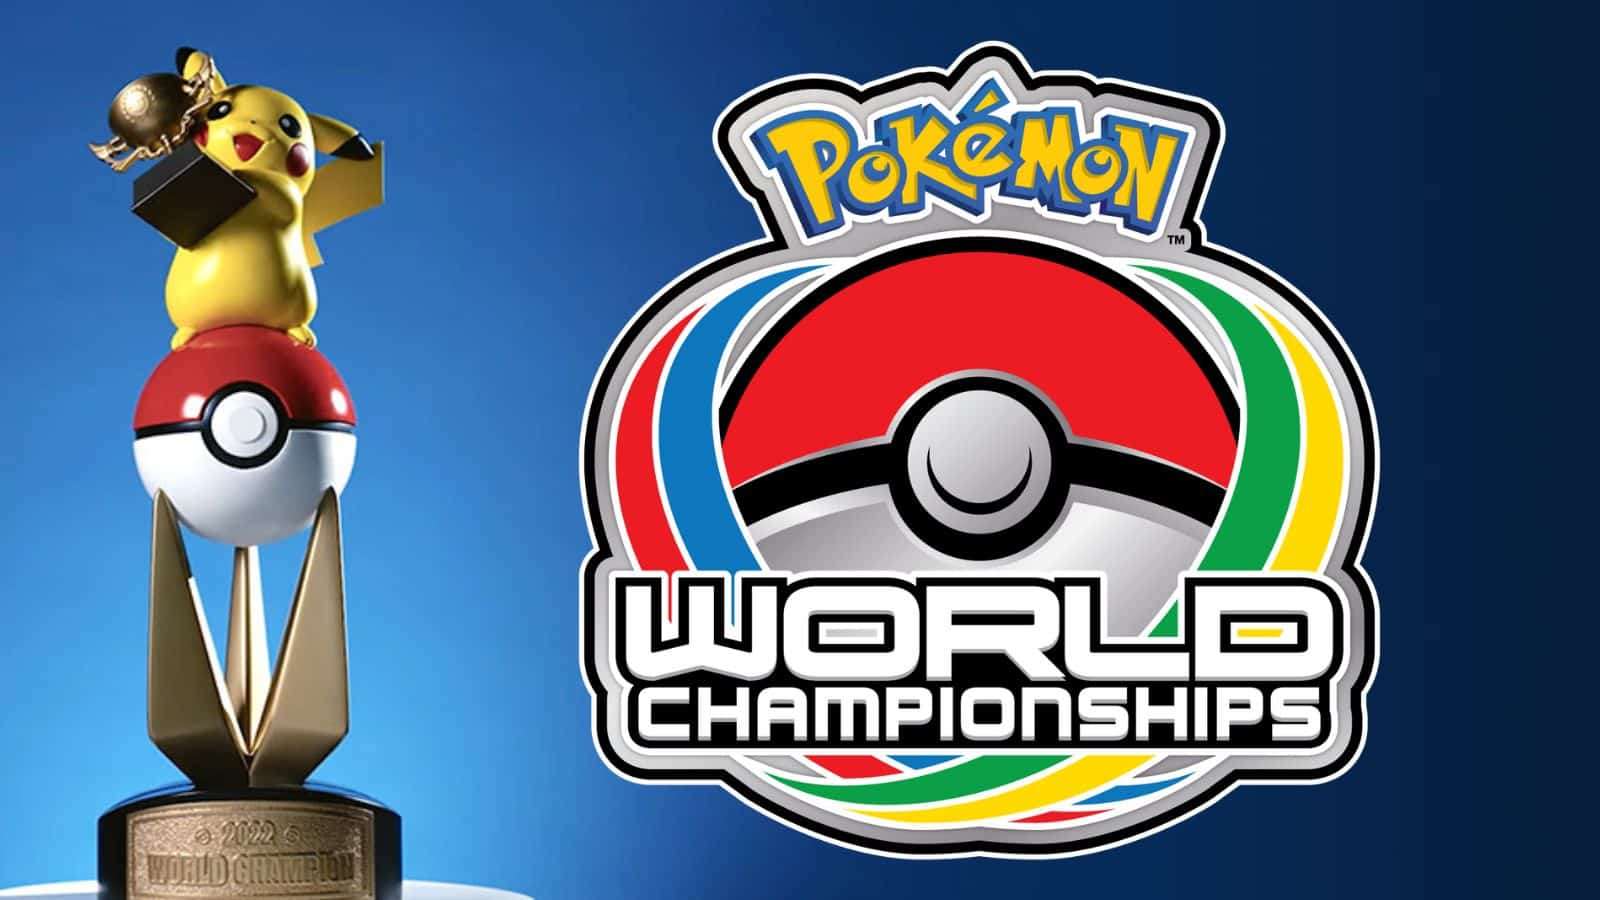 pokemon world championship 2022 trophy logo header